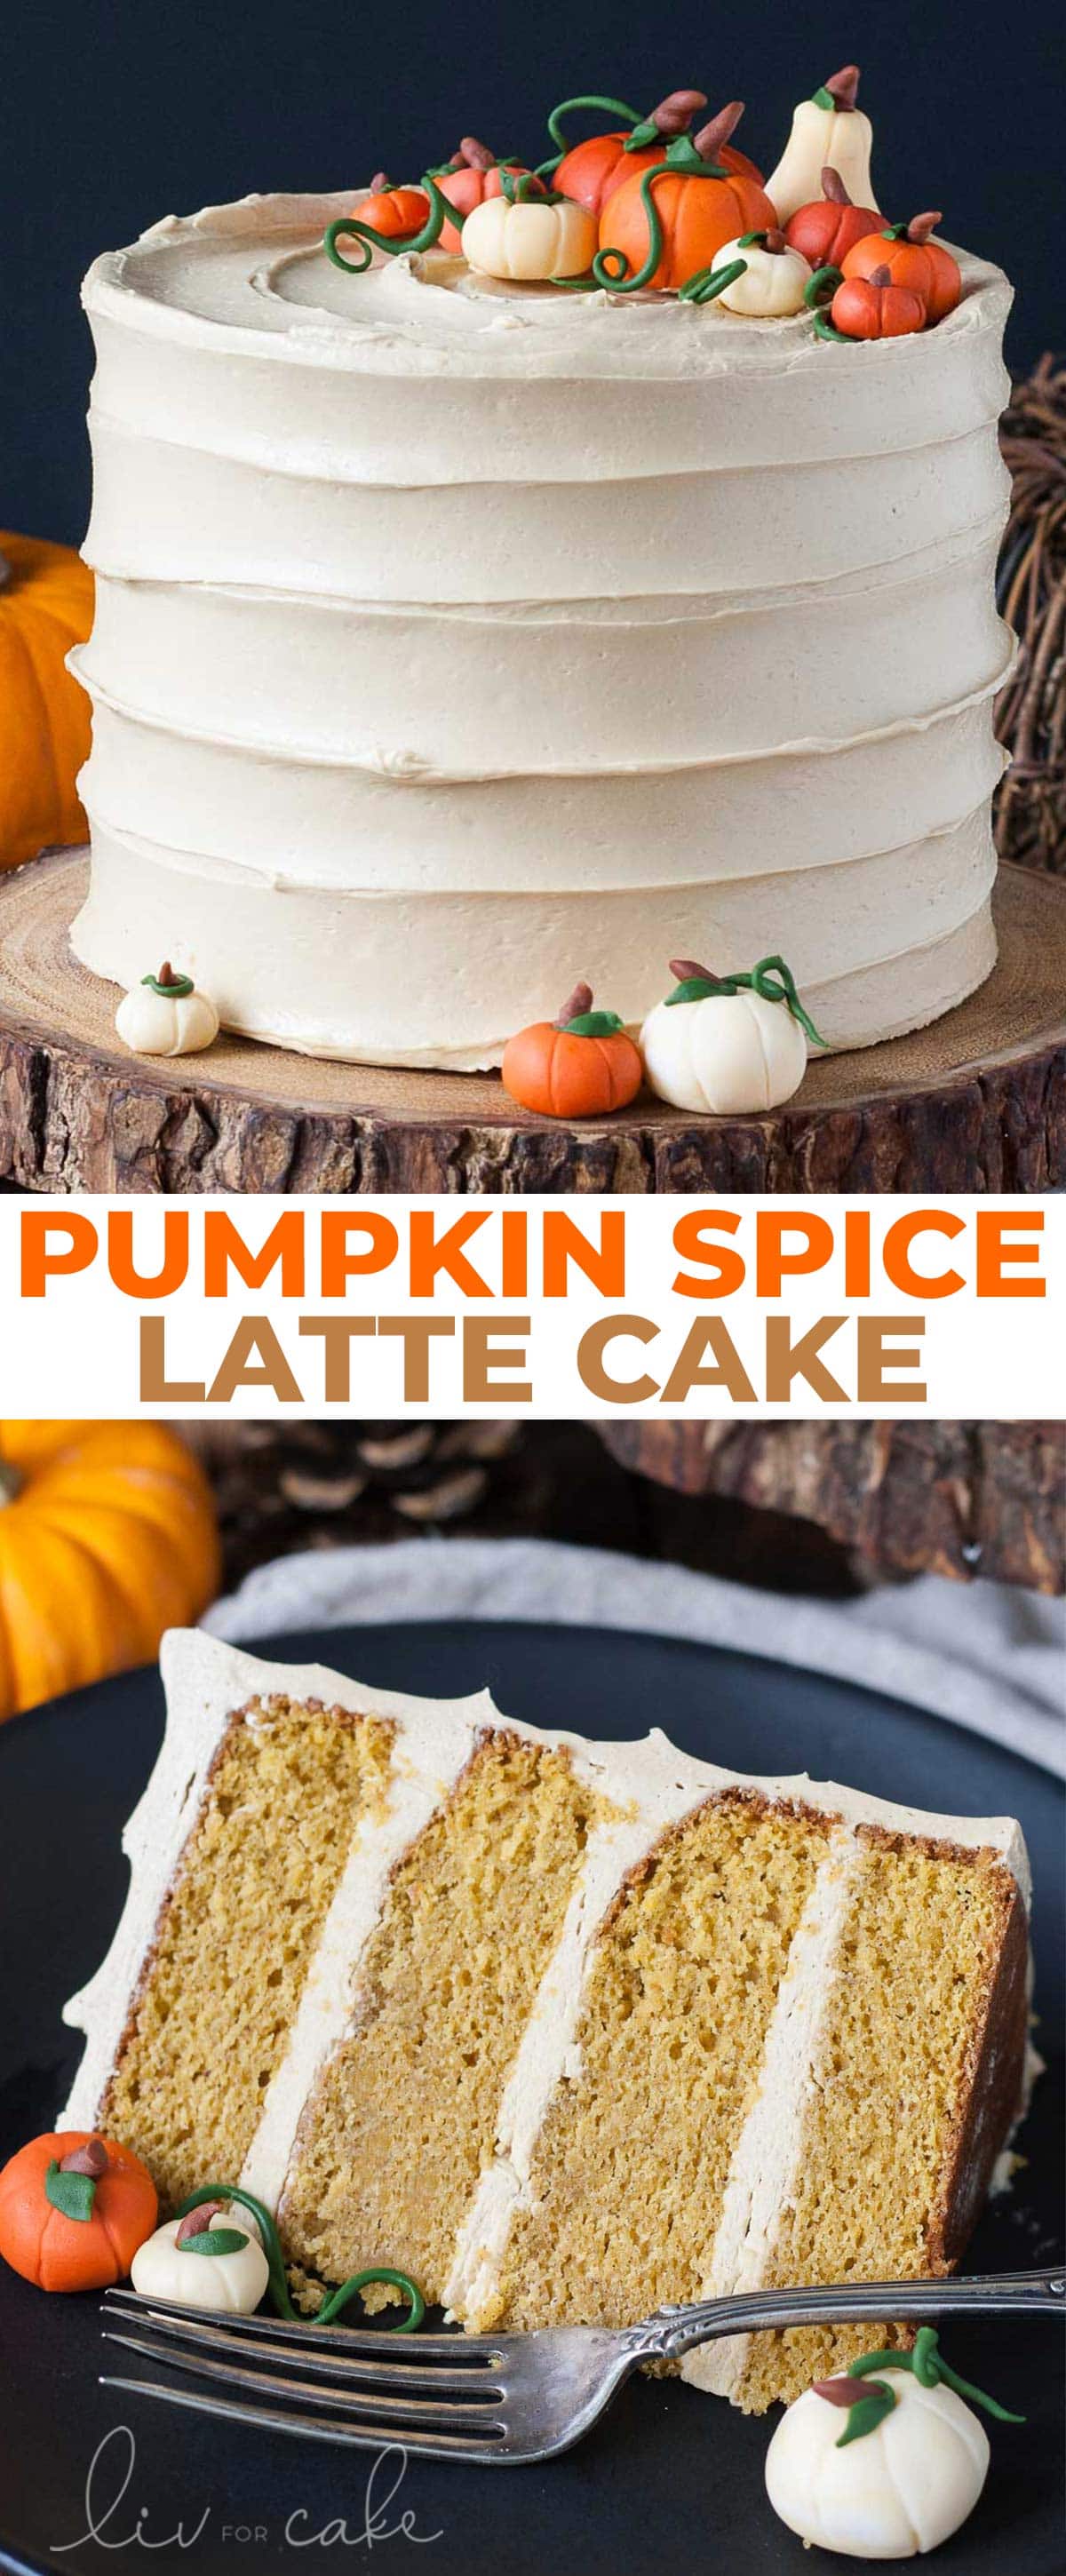 Pumpkin spice latte cake photo collage